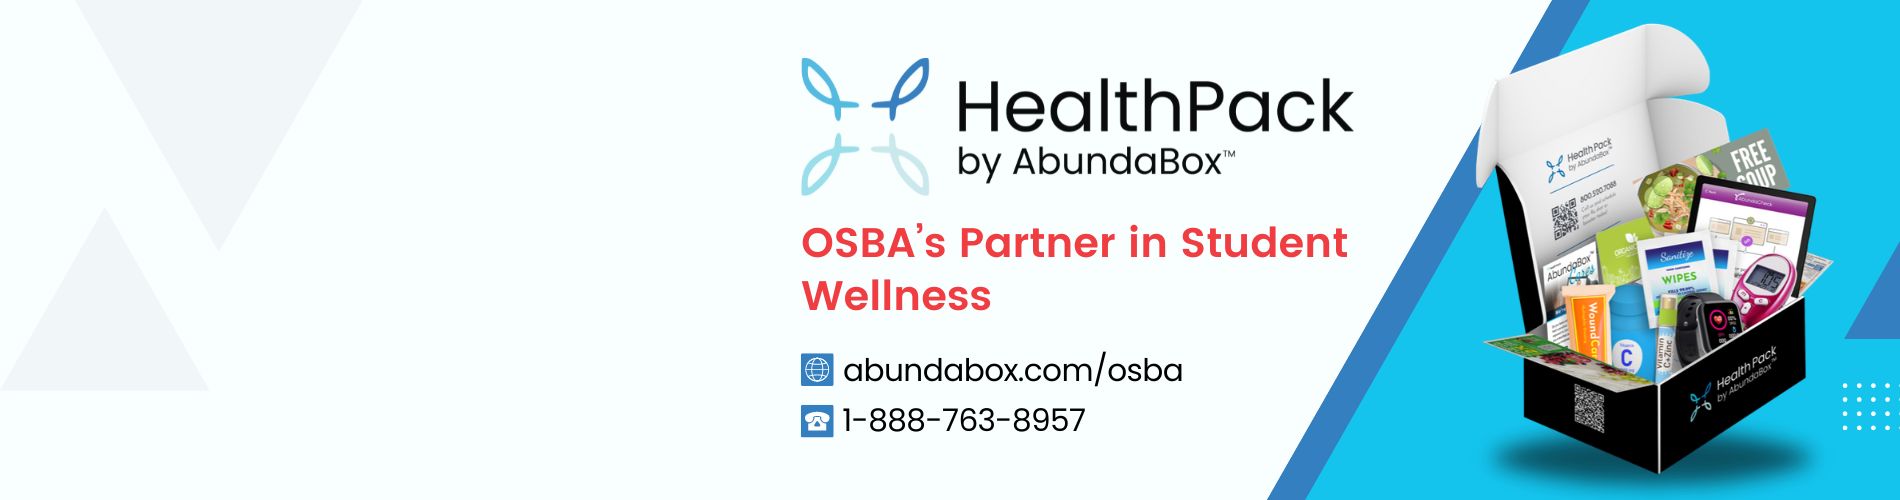 HealthPacks by AbundaBox